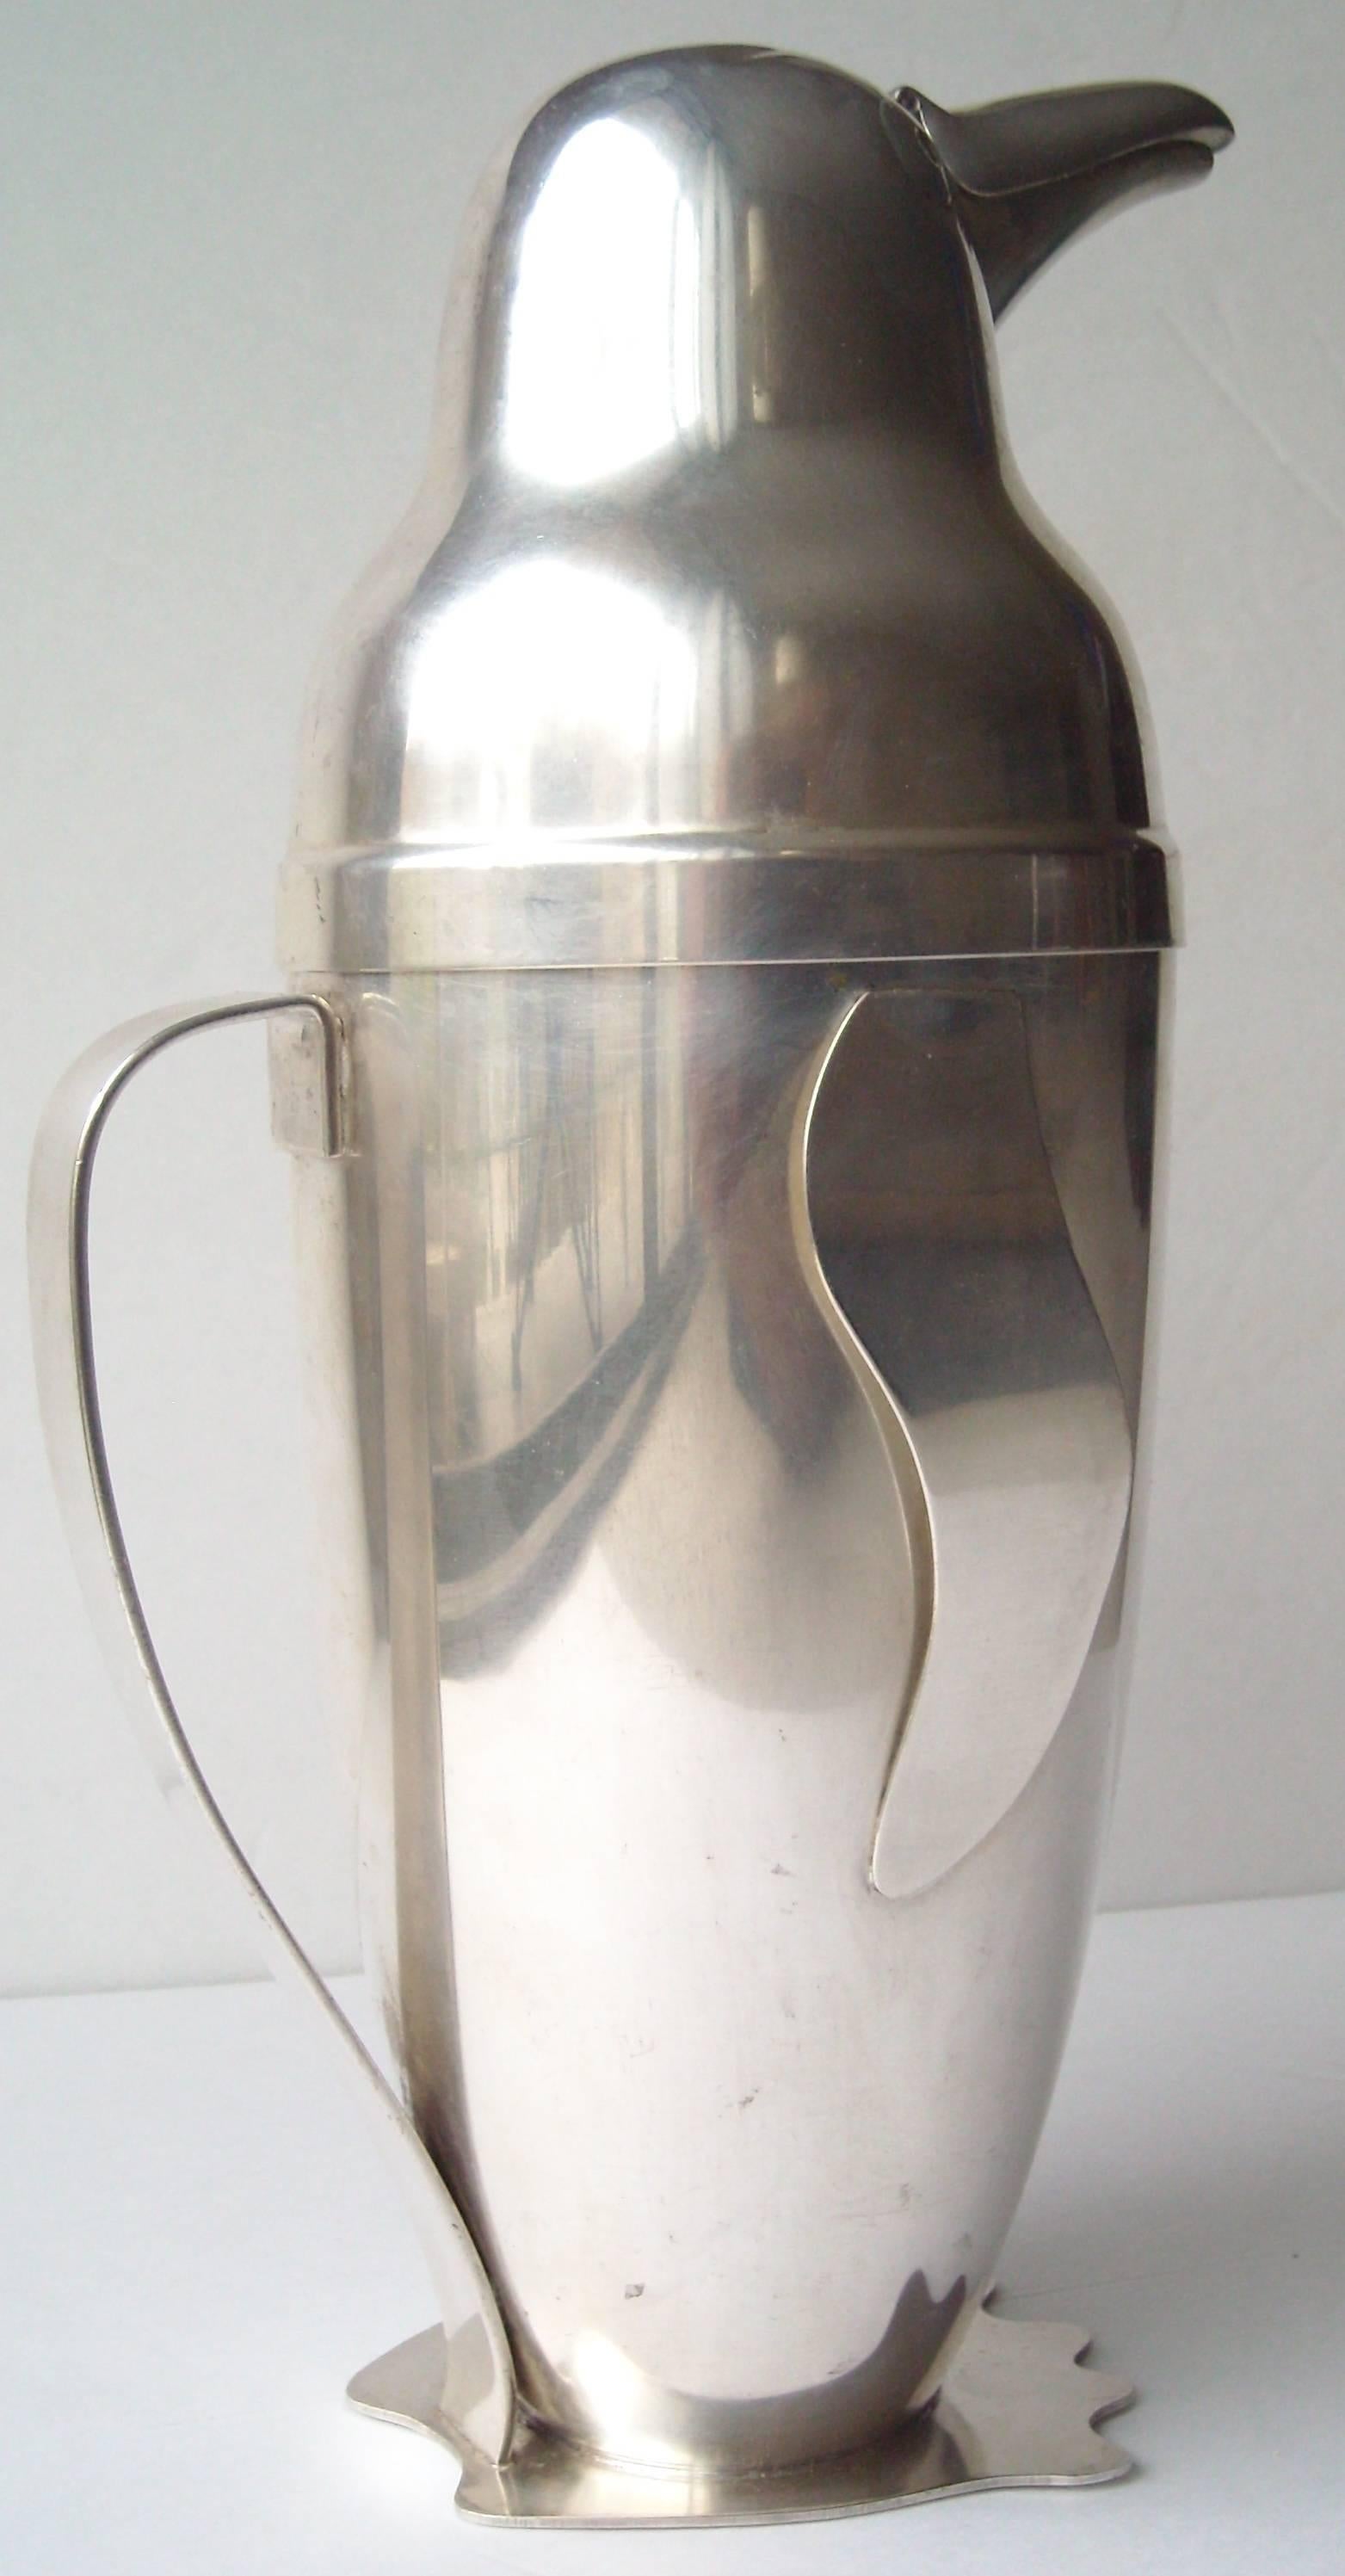 Metalwork Napier Silver Plate Cocktail Shaker, Designed by Emile Schuelke, in 1936, Marked